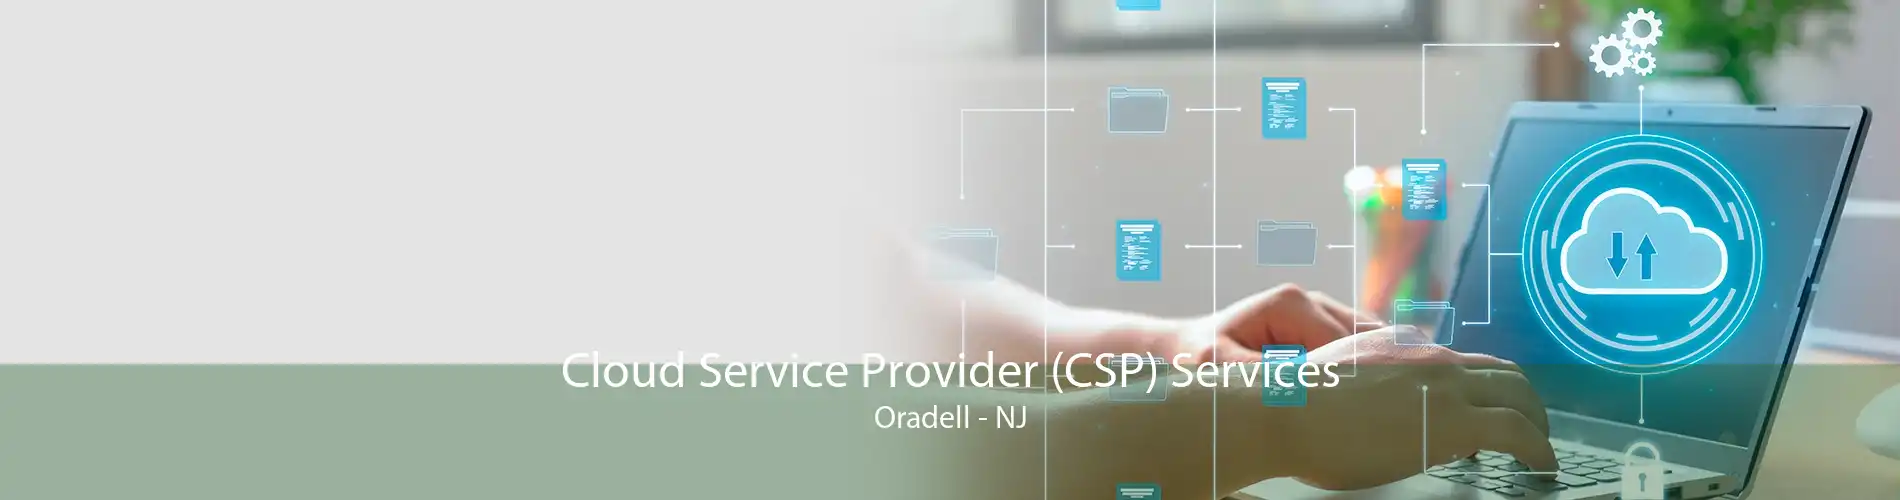 Cloud Service Provider (CSP) Services Oradell - NJ